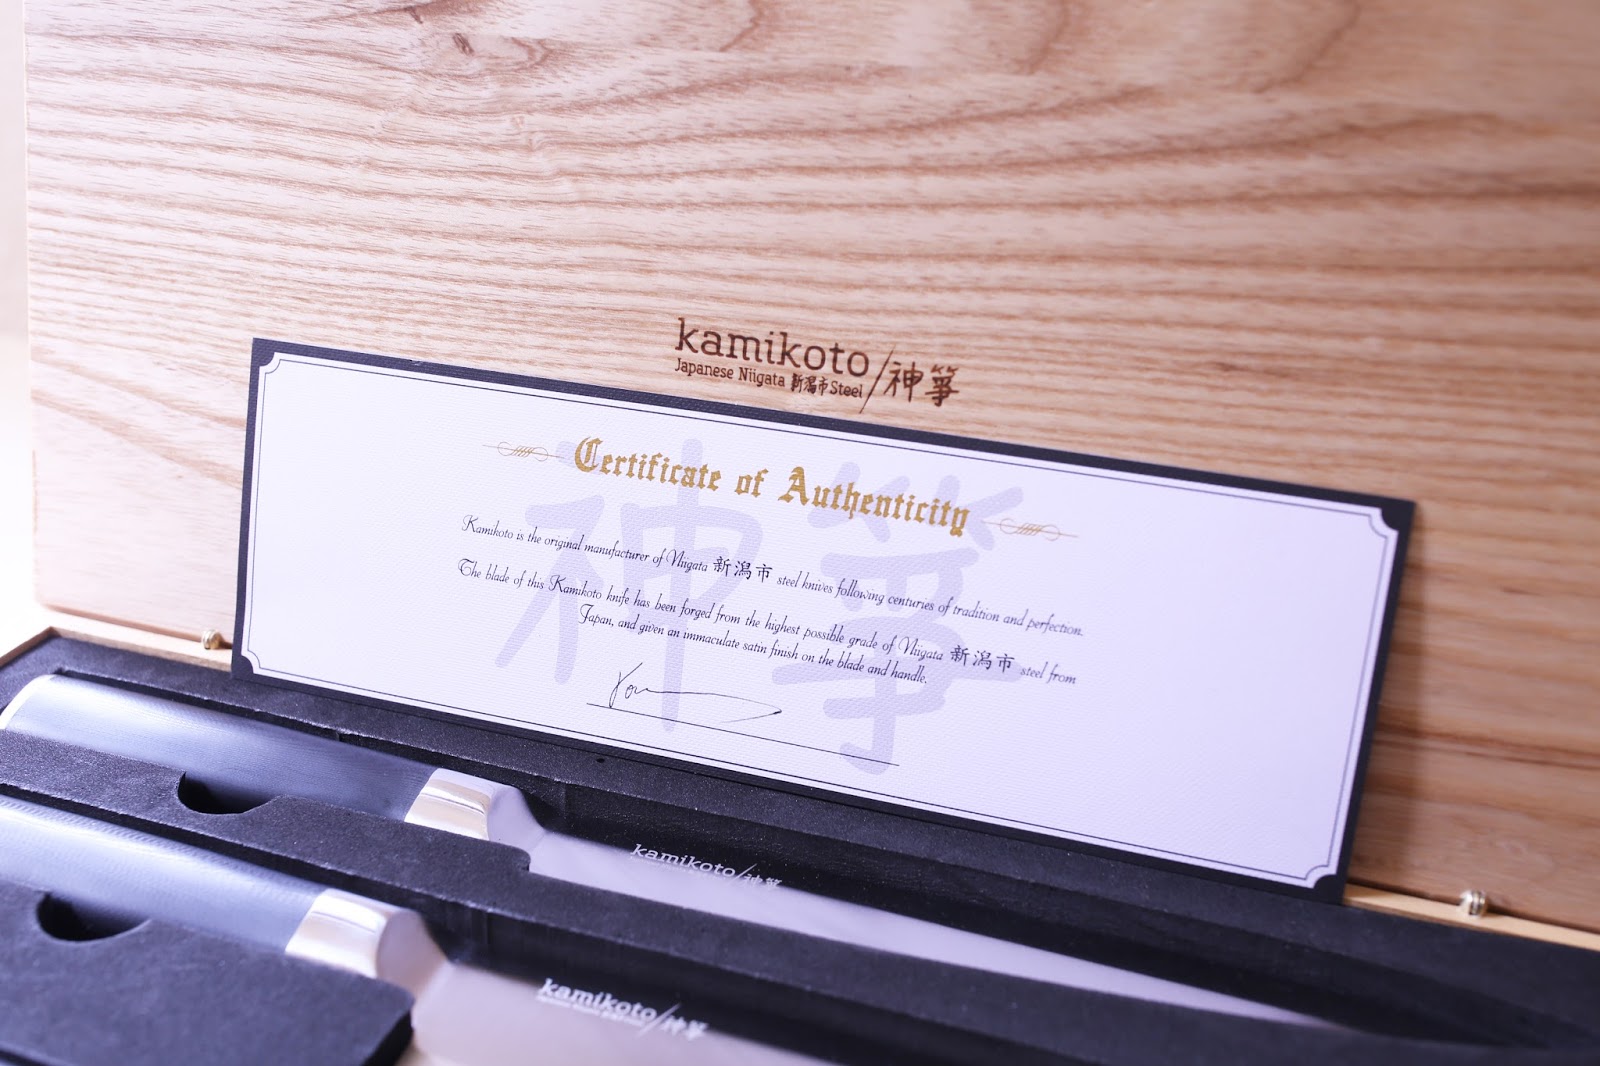 Kamikoto Kanepki Knife Set W/ Certificate Of Authenticity. BRAND